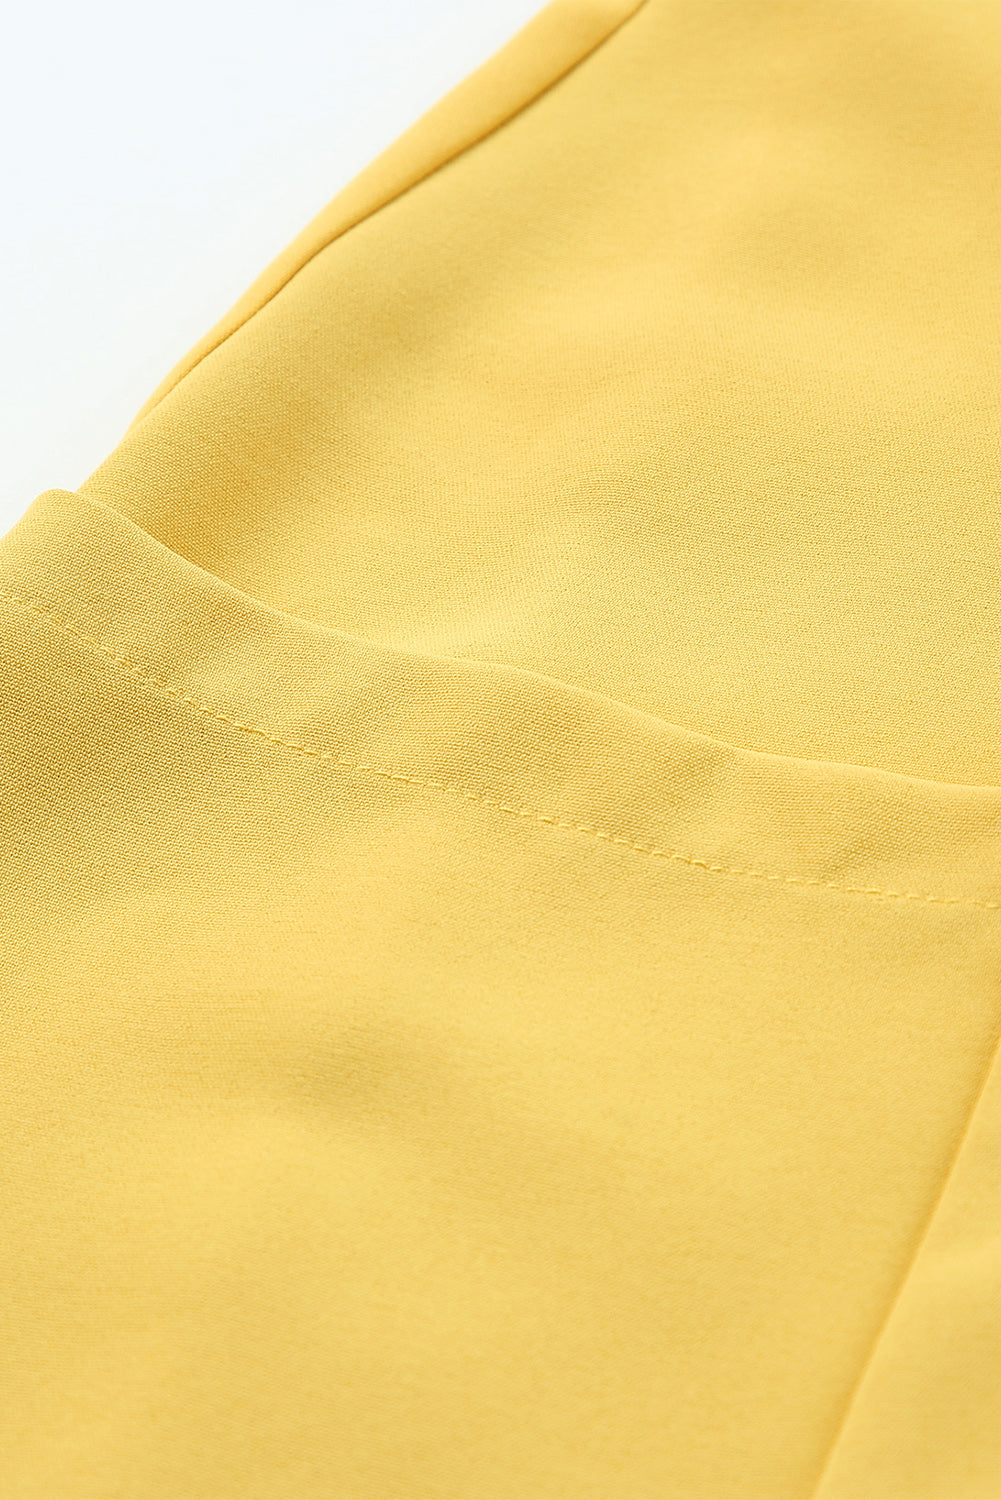 Robe trapèze babydoll jaune à fleurs brodées à col fendu